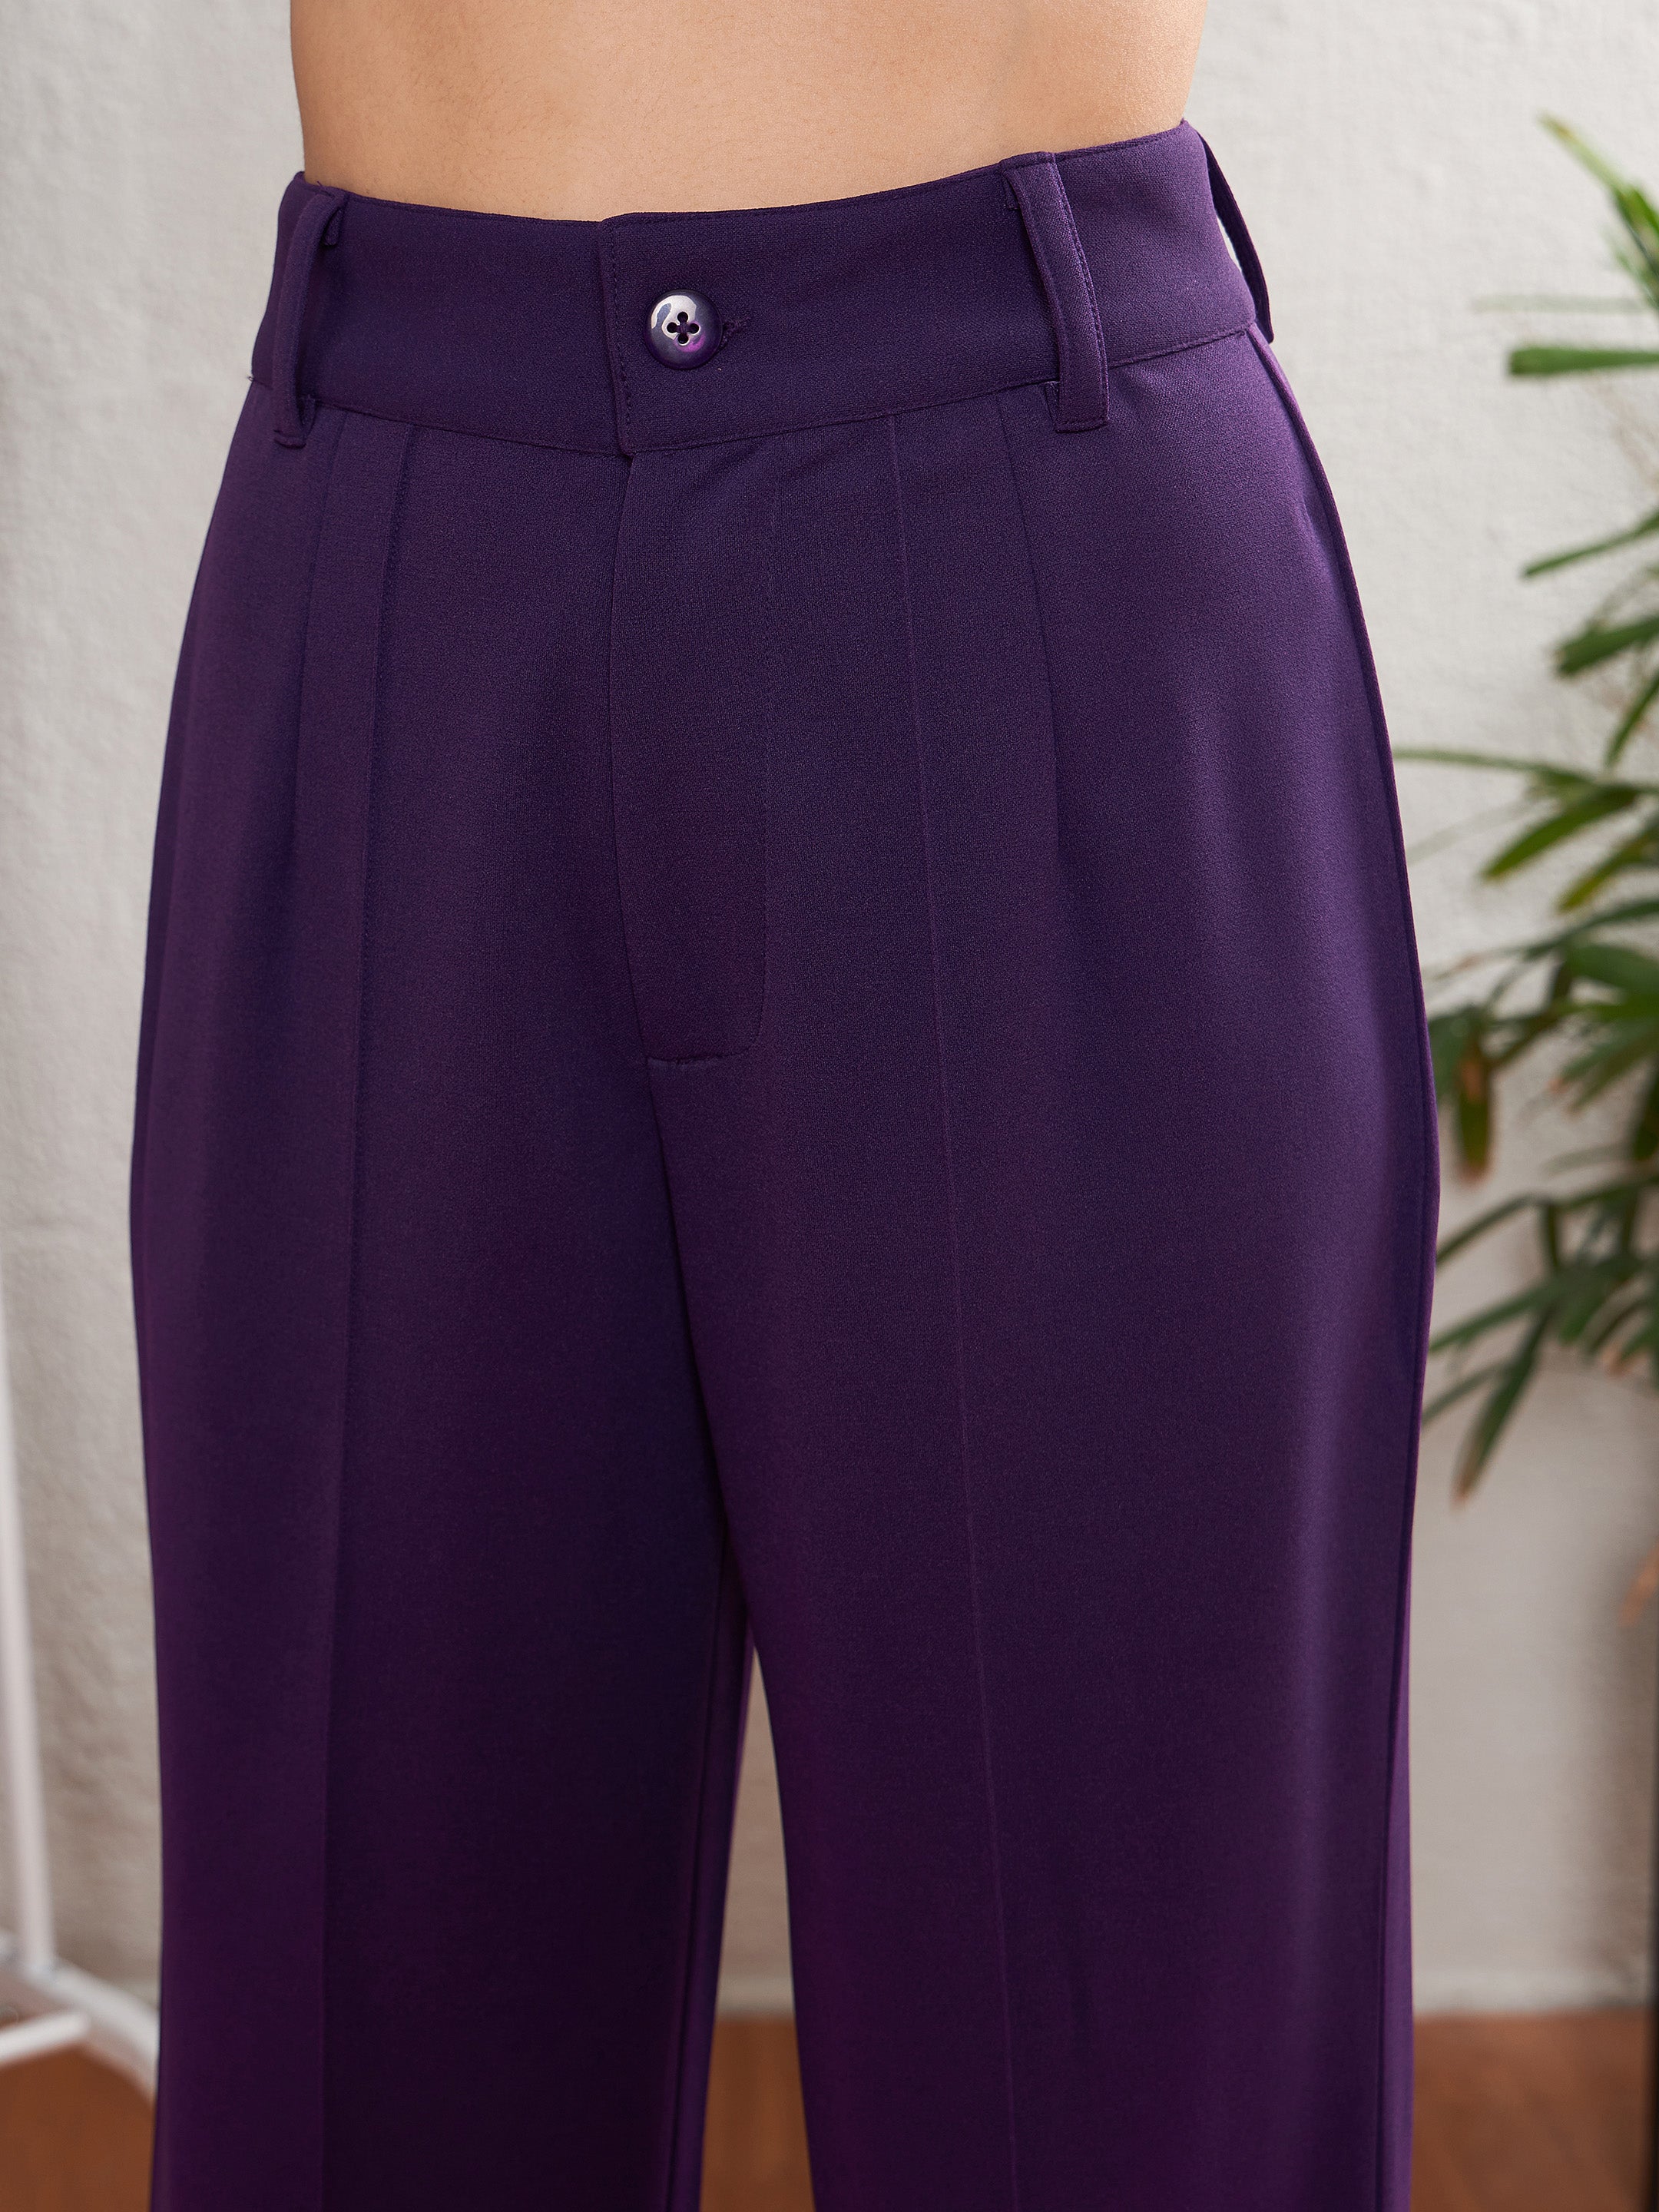 Women's Purple Front Darted Pants - SASSAFRAS